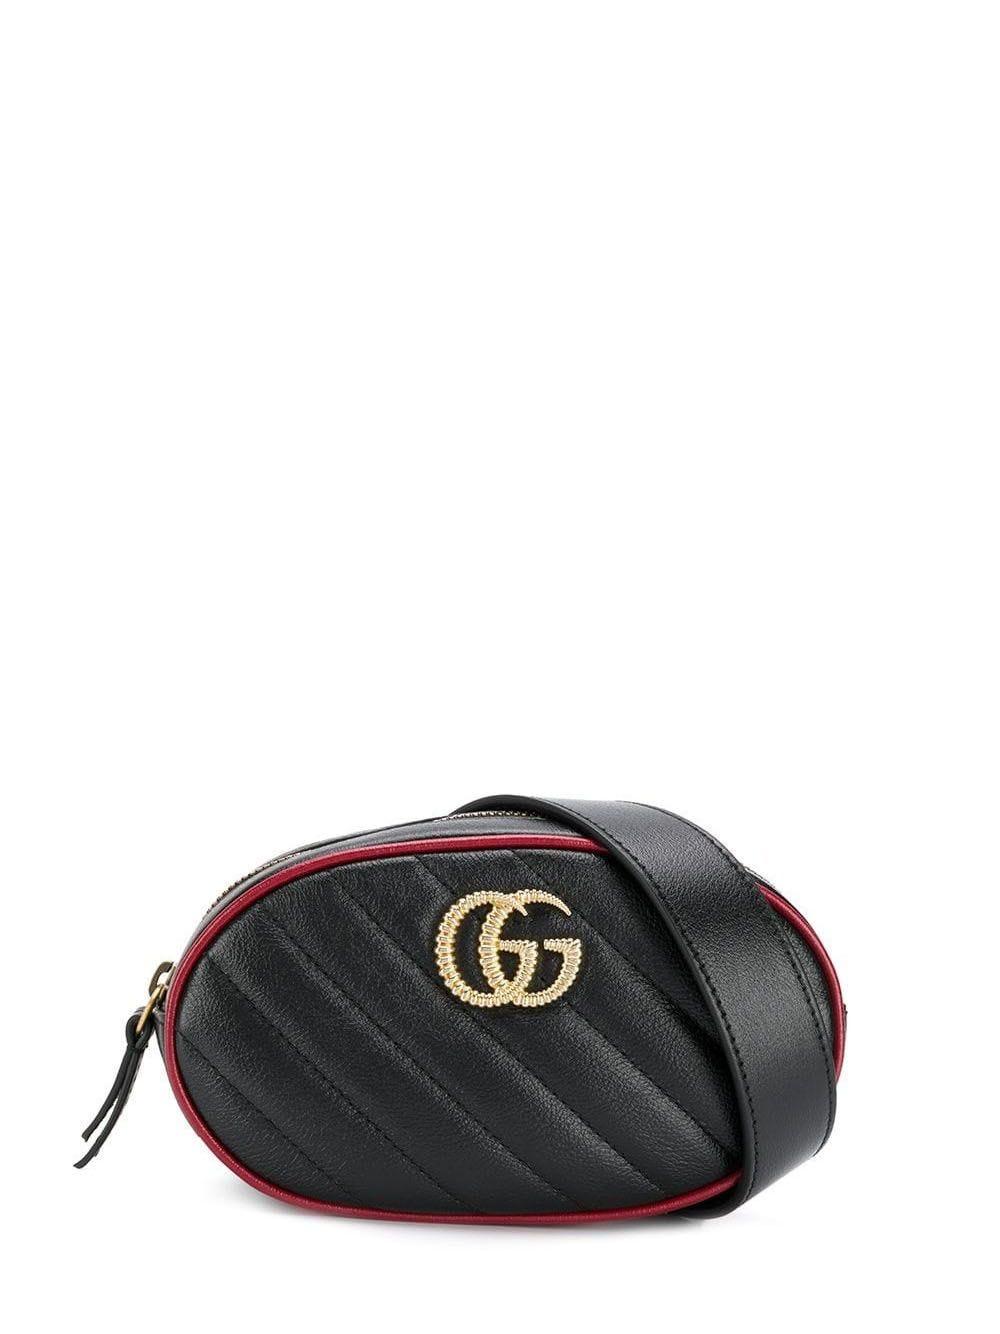 Gucci GG Marmont Matelassé Belt Bag in Black | Lyst